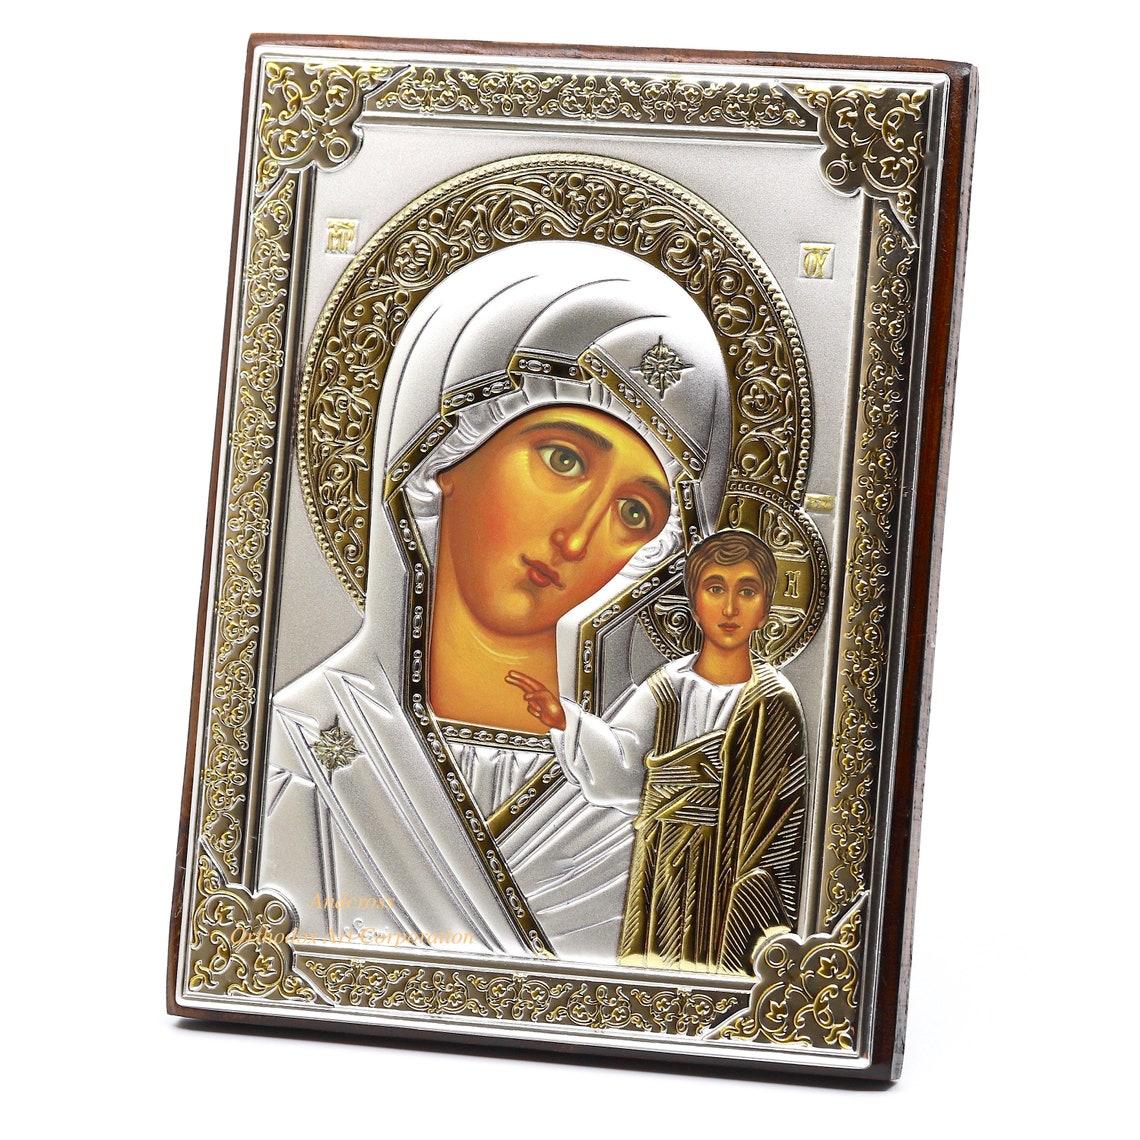 Medium Wooden Russian Orthodox Icon Mother Of God Kazan. Silver Plated .999 Oklad Riza ( 5.12″ X 7.1″ ) 13cm X 18cm. B160|il_1140xn.3529410403_g3p9.jpg|Medium Wooden Russian Orthodox Icon Mother Of God Kazan. Silver Plated .999 Oklad Riza ( 5.12″ X 7.1″ ) 13cm X 18cm. B160|Medium Wooden Russian Orthodox Icon Mother Of God Kazan. Silver Plated .999 Oklad Riza ( 5.12″ X 7.1″ ) 13cm X 18cm. B160|Medium Wooden Russian Orthodox Icon Mother Of God Kazan. Silver Plated .999 Oklad Riza ( 5.12″ X 7.1″ ) 13cm X 18cm. B160|Medium Wooden Russian Orthodox Icon Mother Of God Kazan. Silver Plated .999 Oklad Riza ( 5.12″ X 7.1″ ) 13cm X 18cm. B160